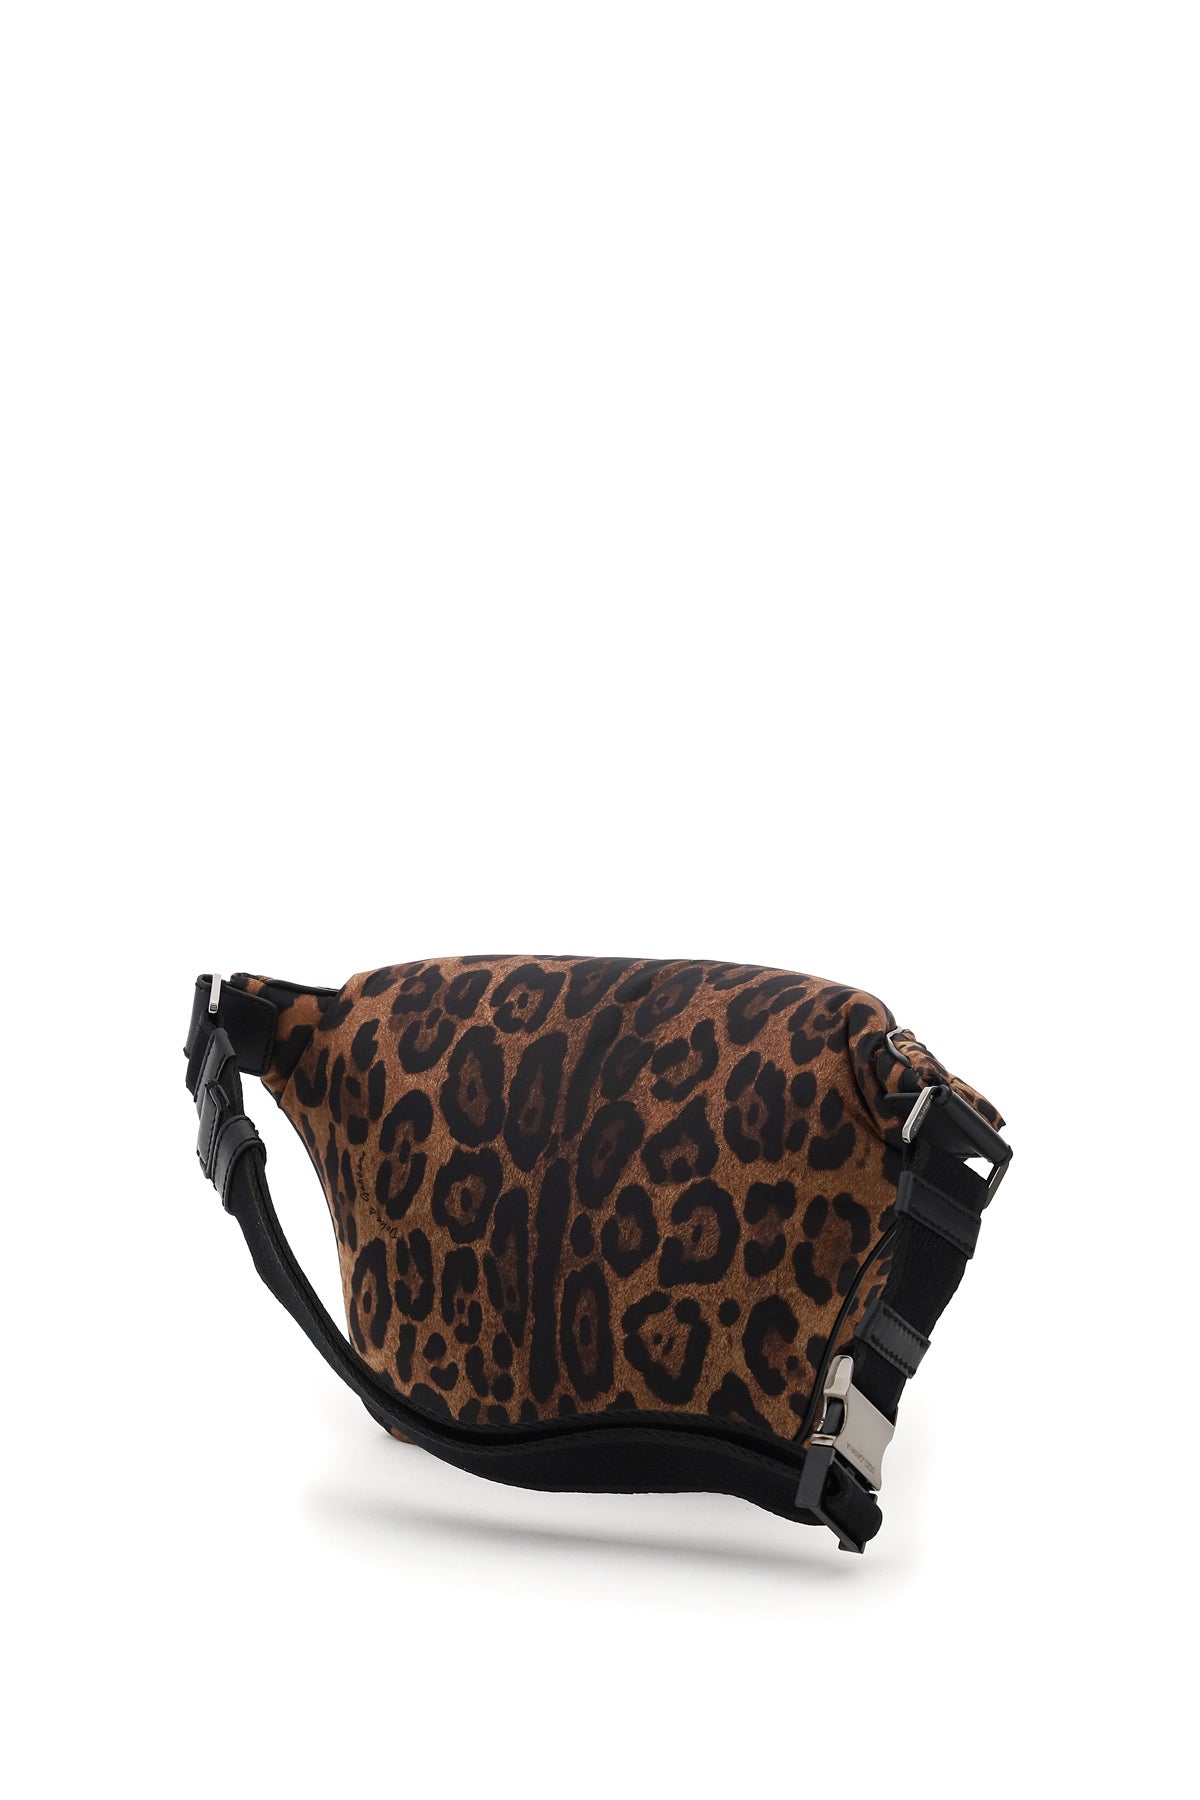 Dolce & Gabbana Leopard Print Nylon Beltbag   Brown